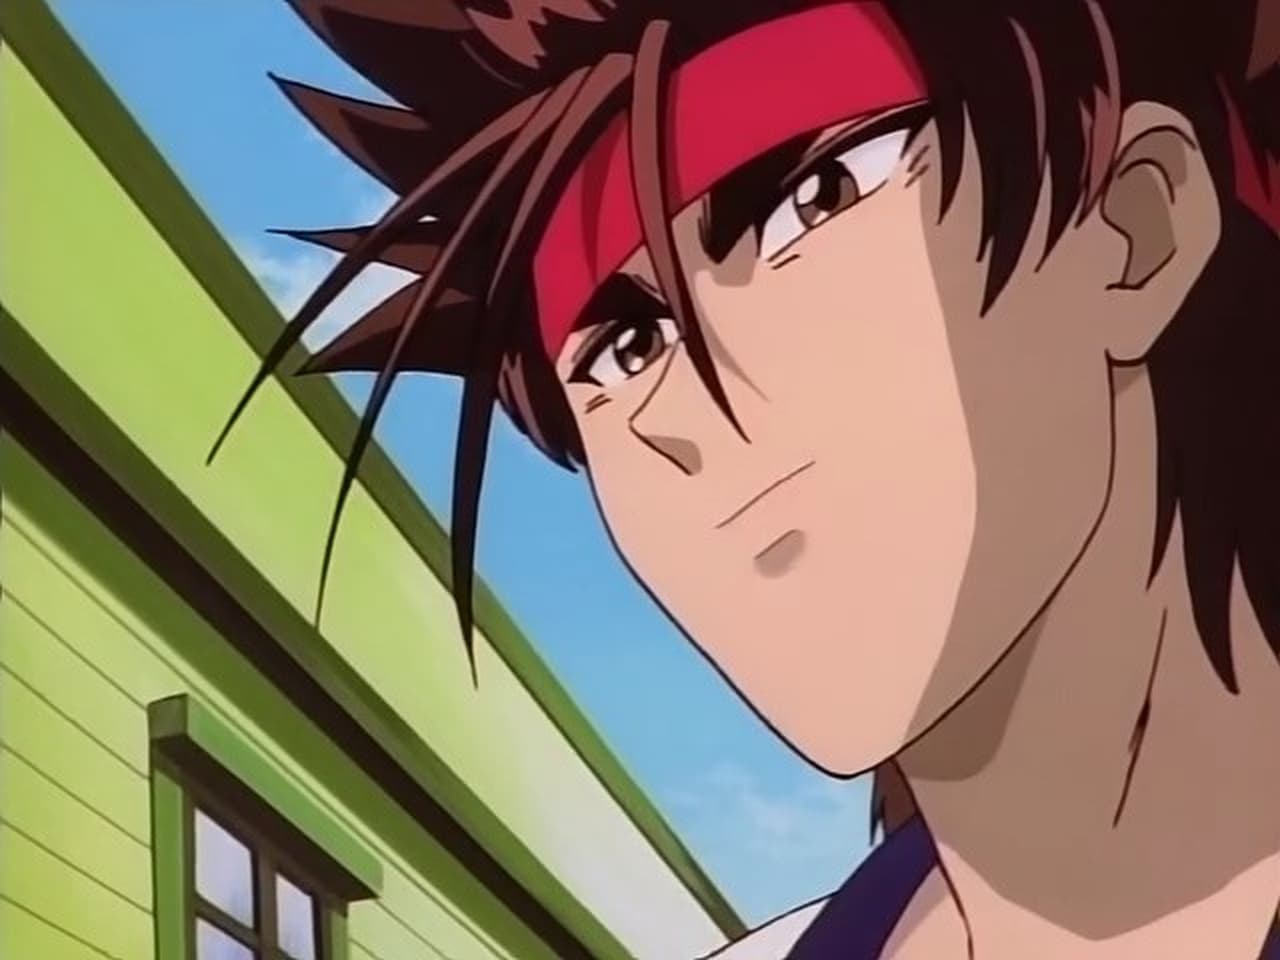 Rurouni Kenshin - Season 1 Episode 4 : Bad! Introducing Sanosuke, Fighter-for-hire